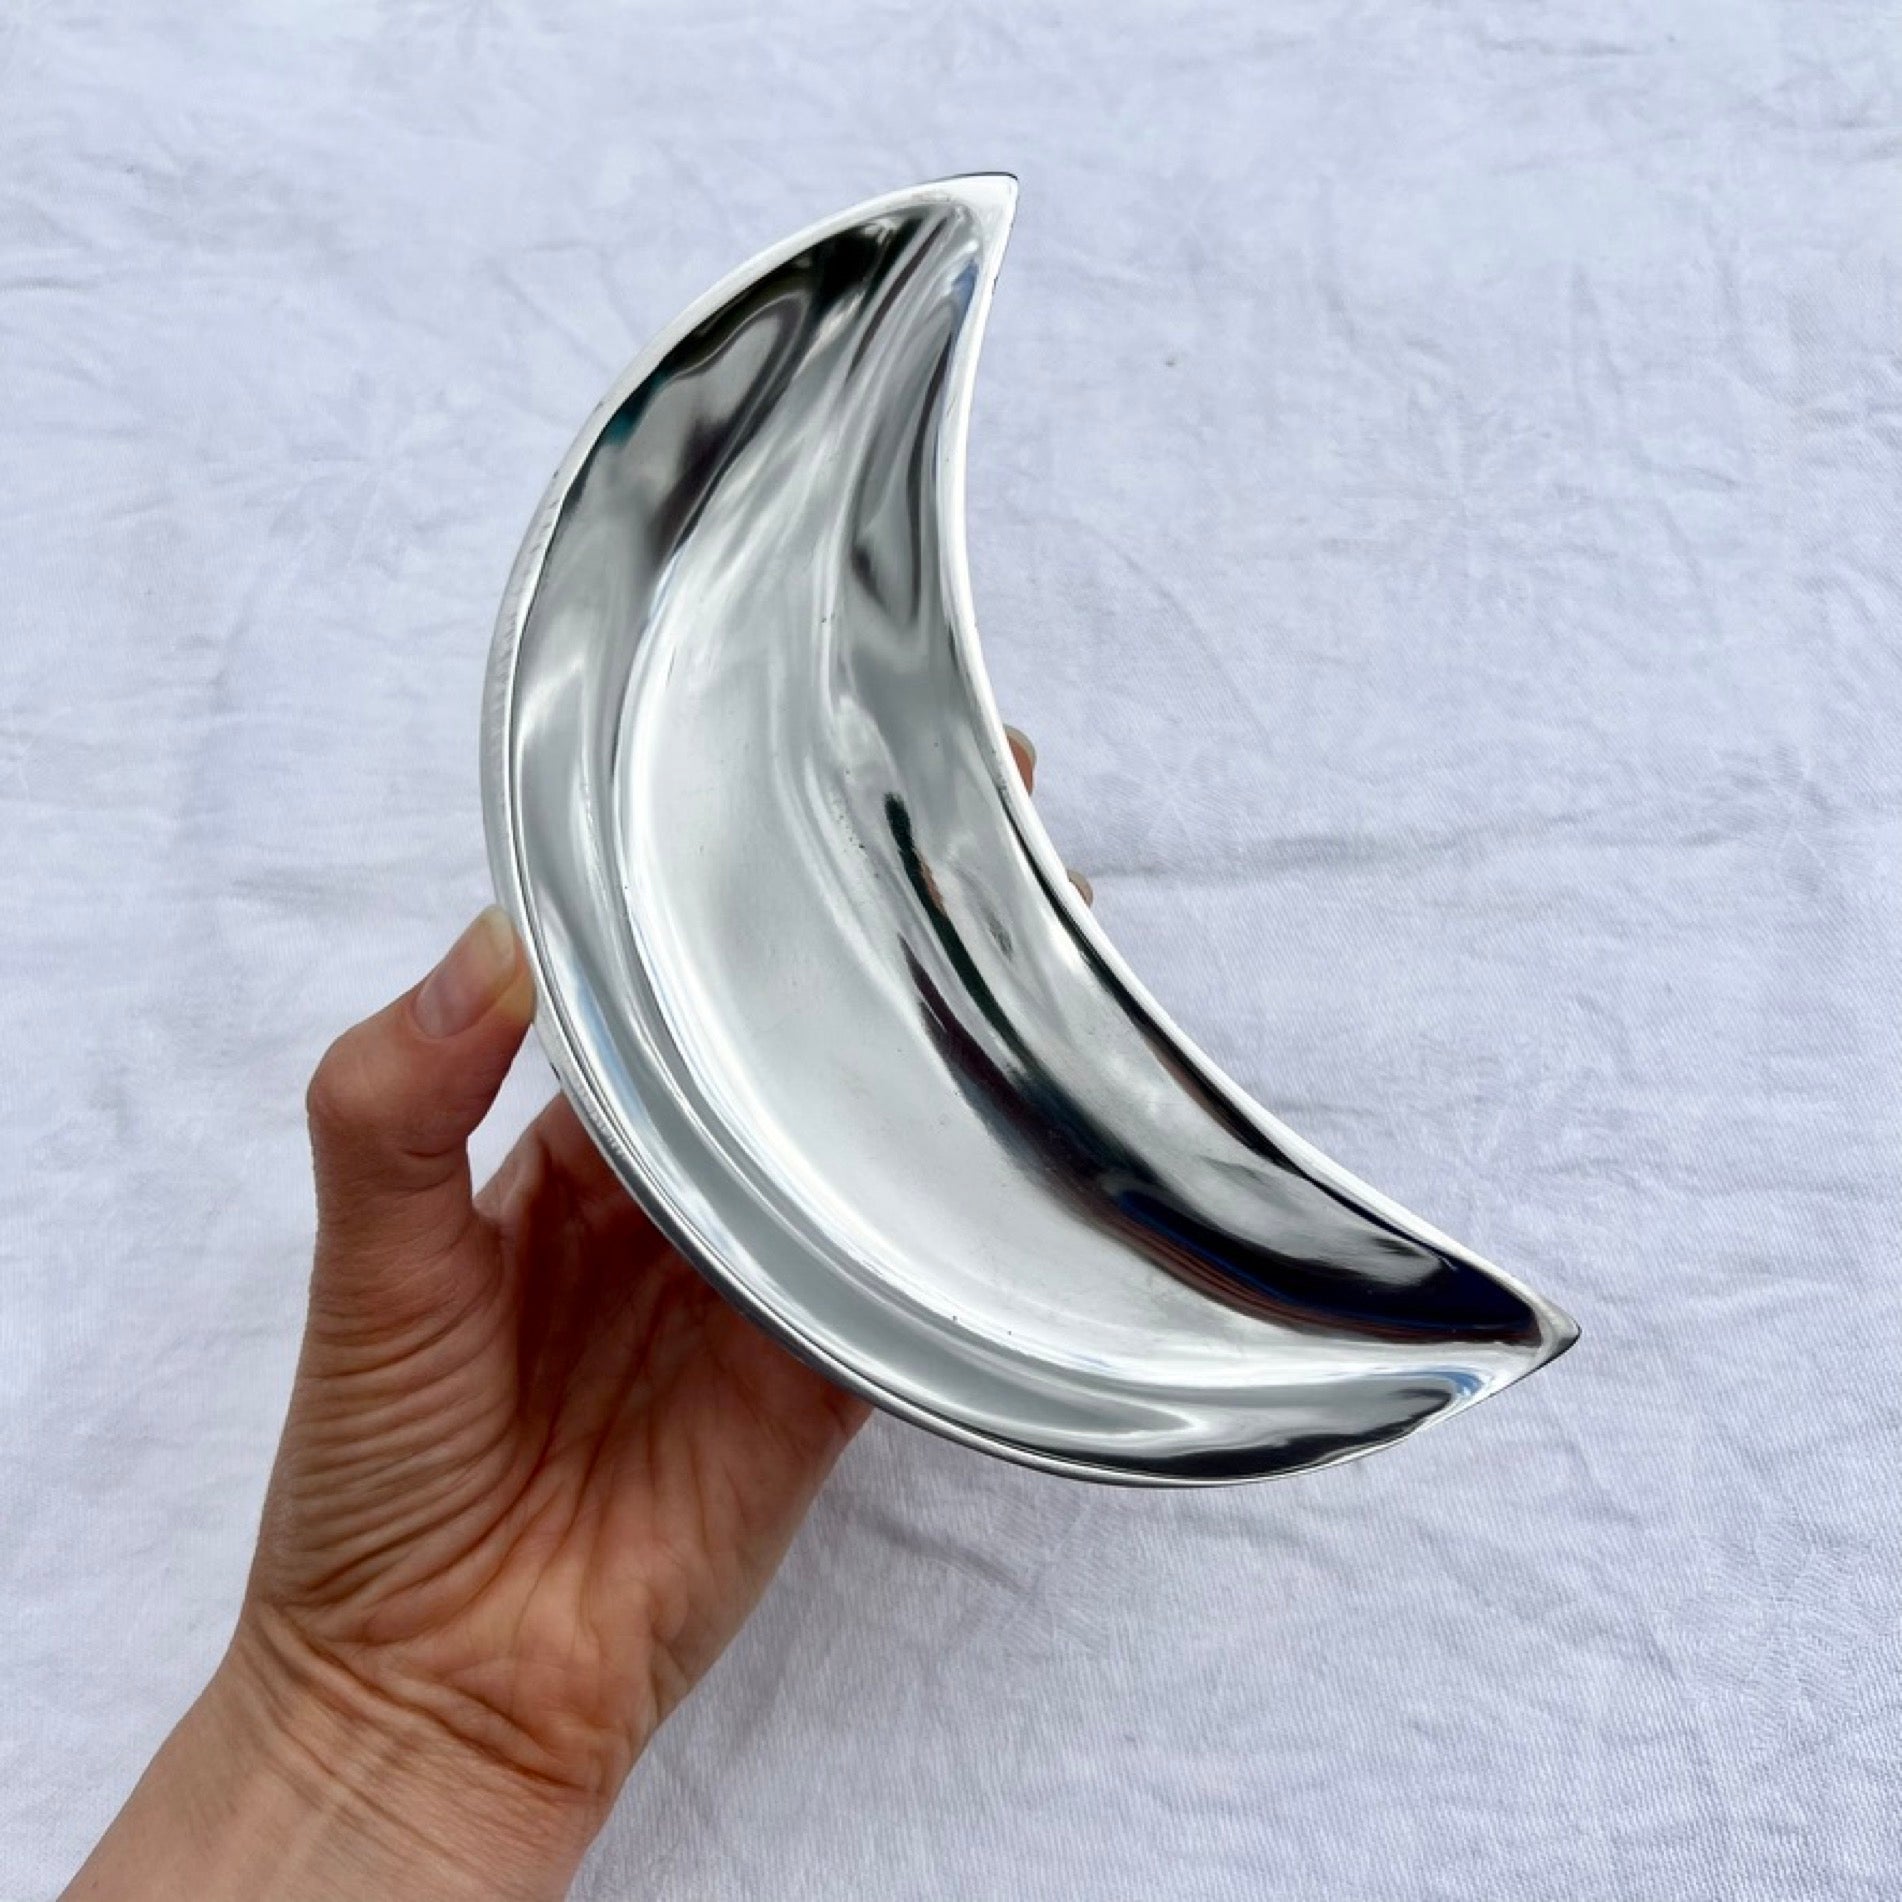 Silver moon bowl held to camera